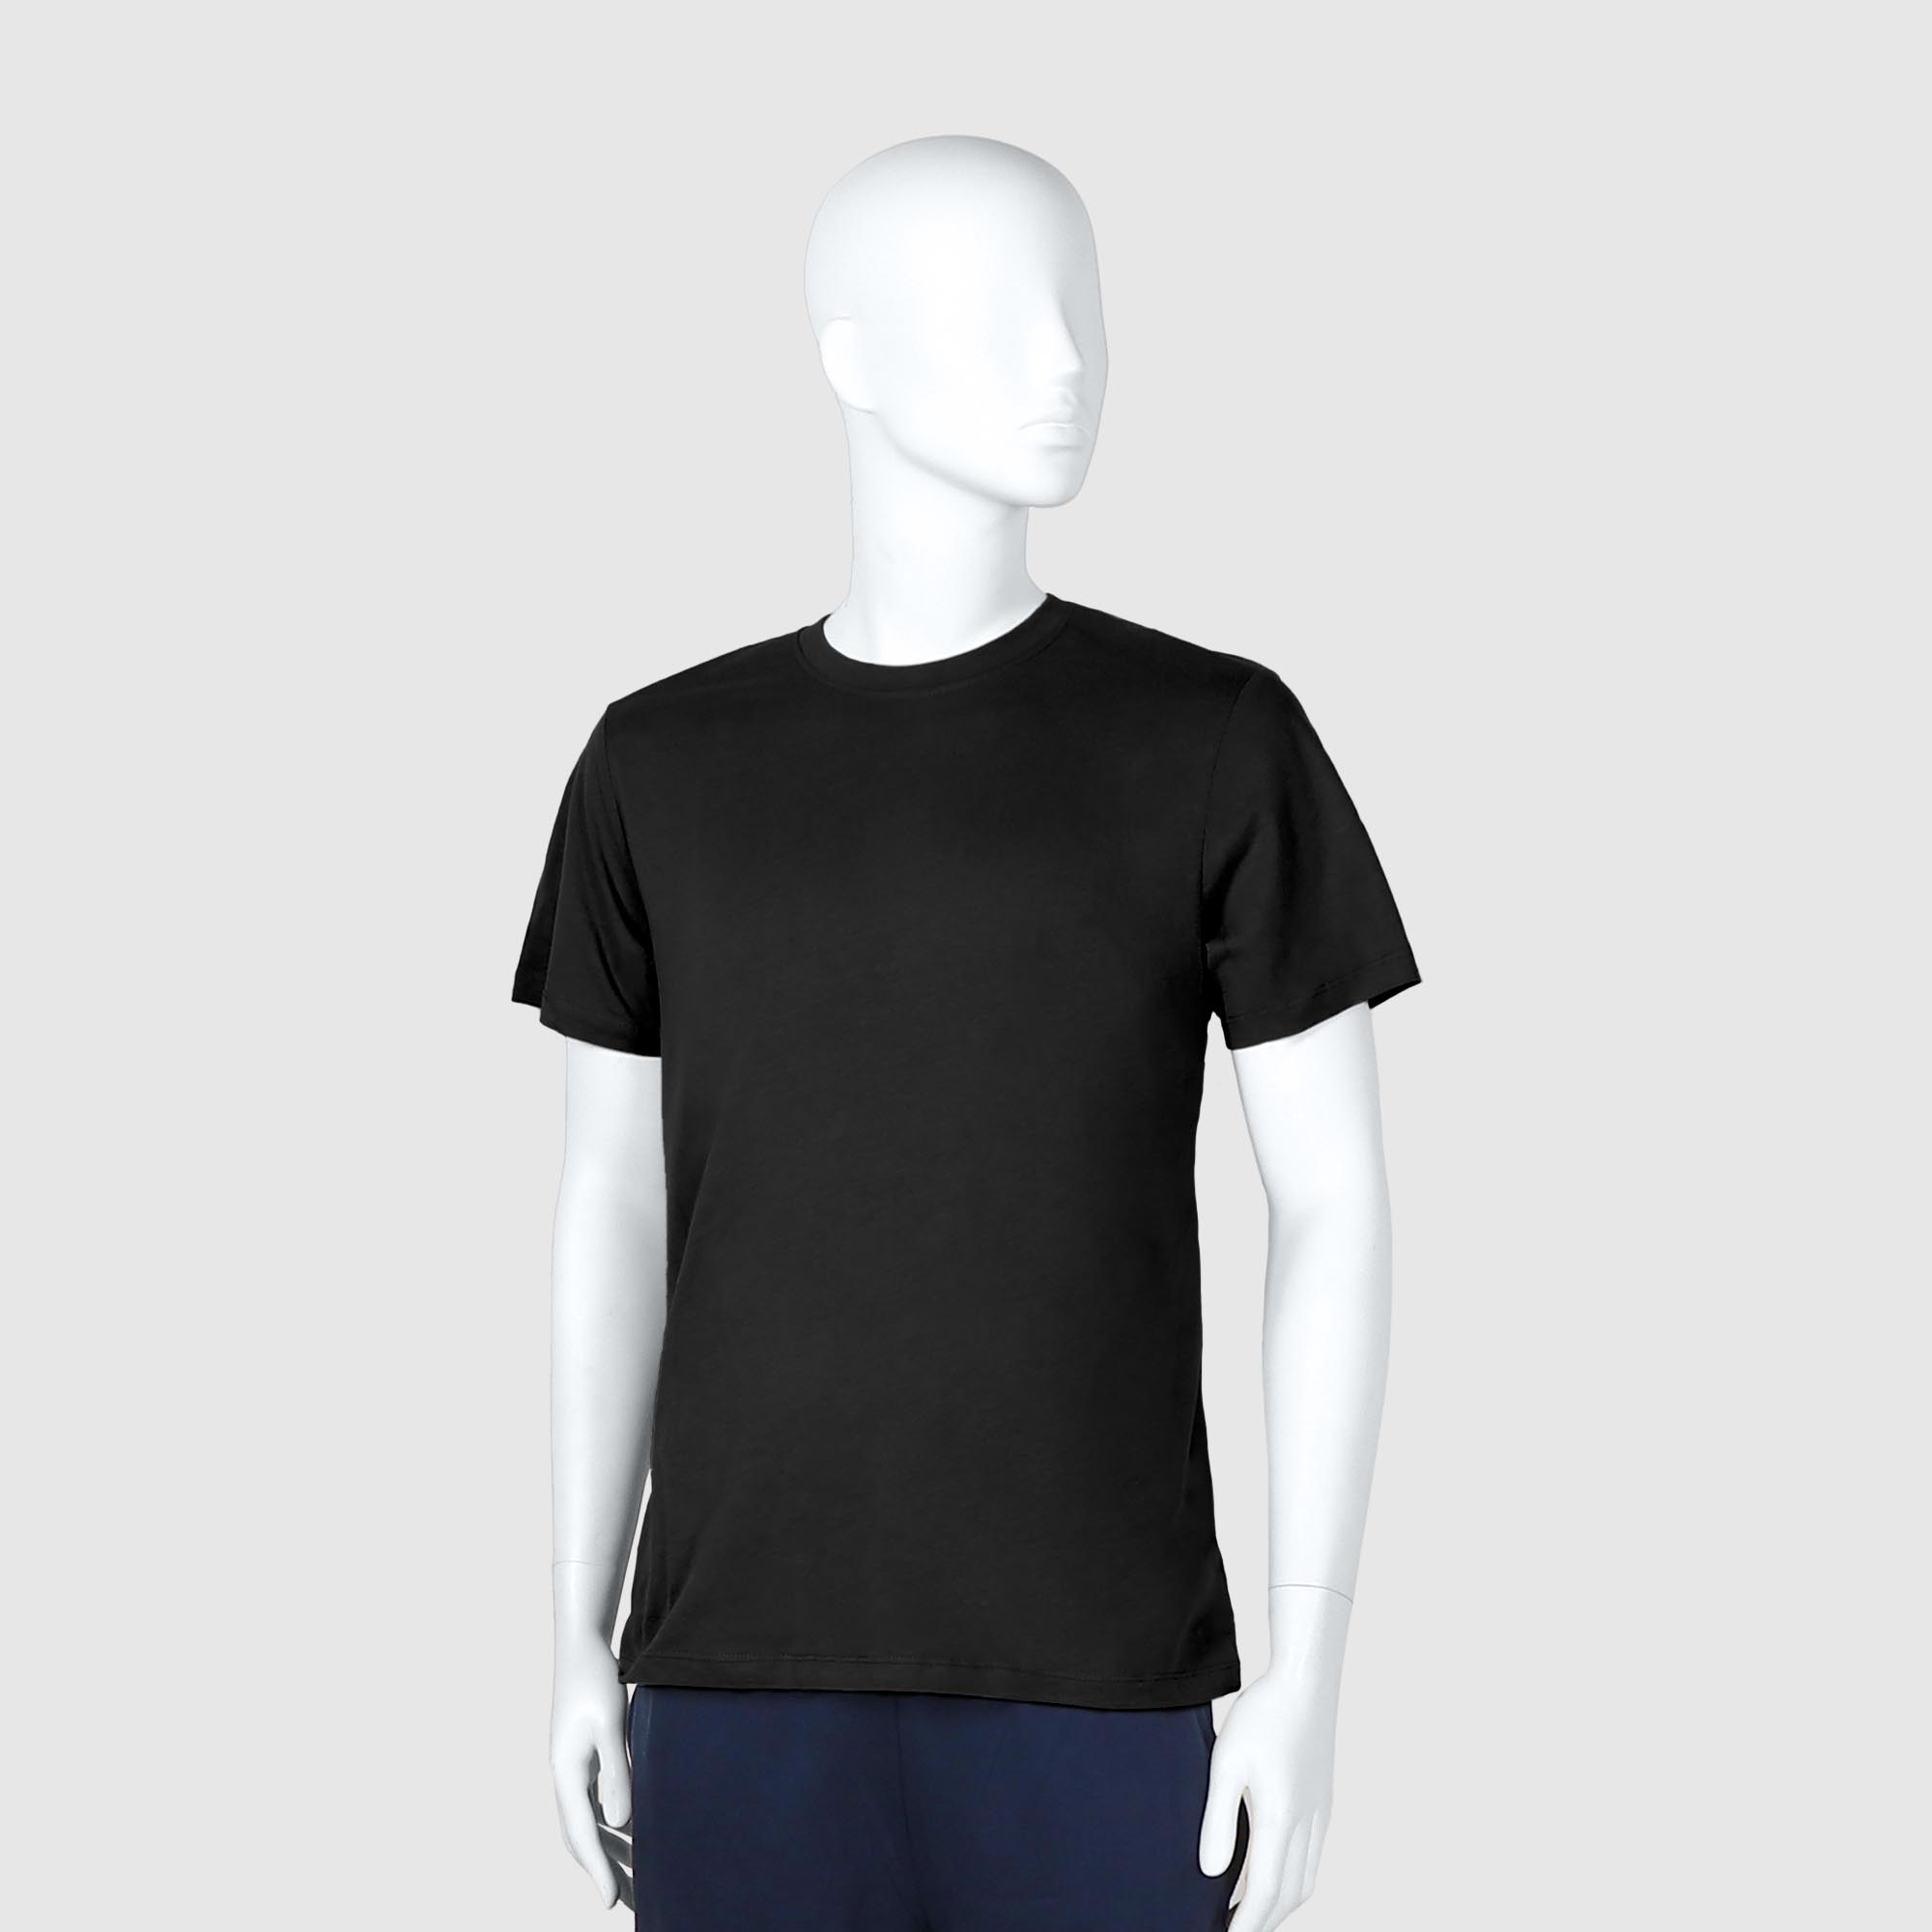 Мужская футболка Diva Teks чёрная (DTD-01), цвет чёрный, размер 54-56